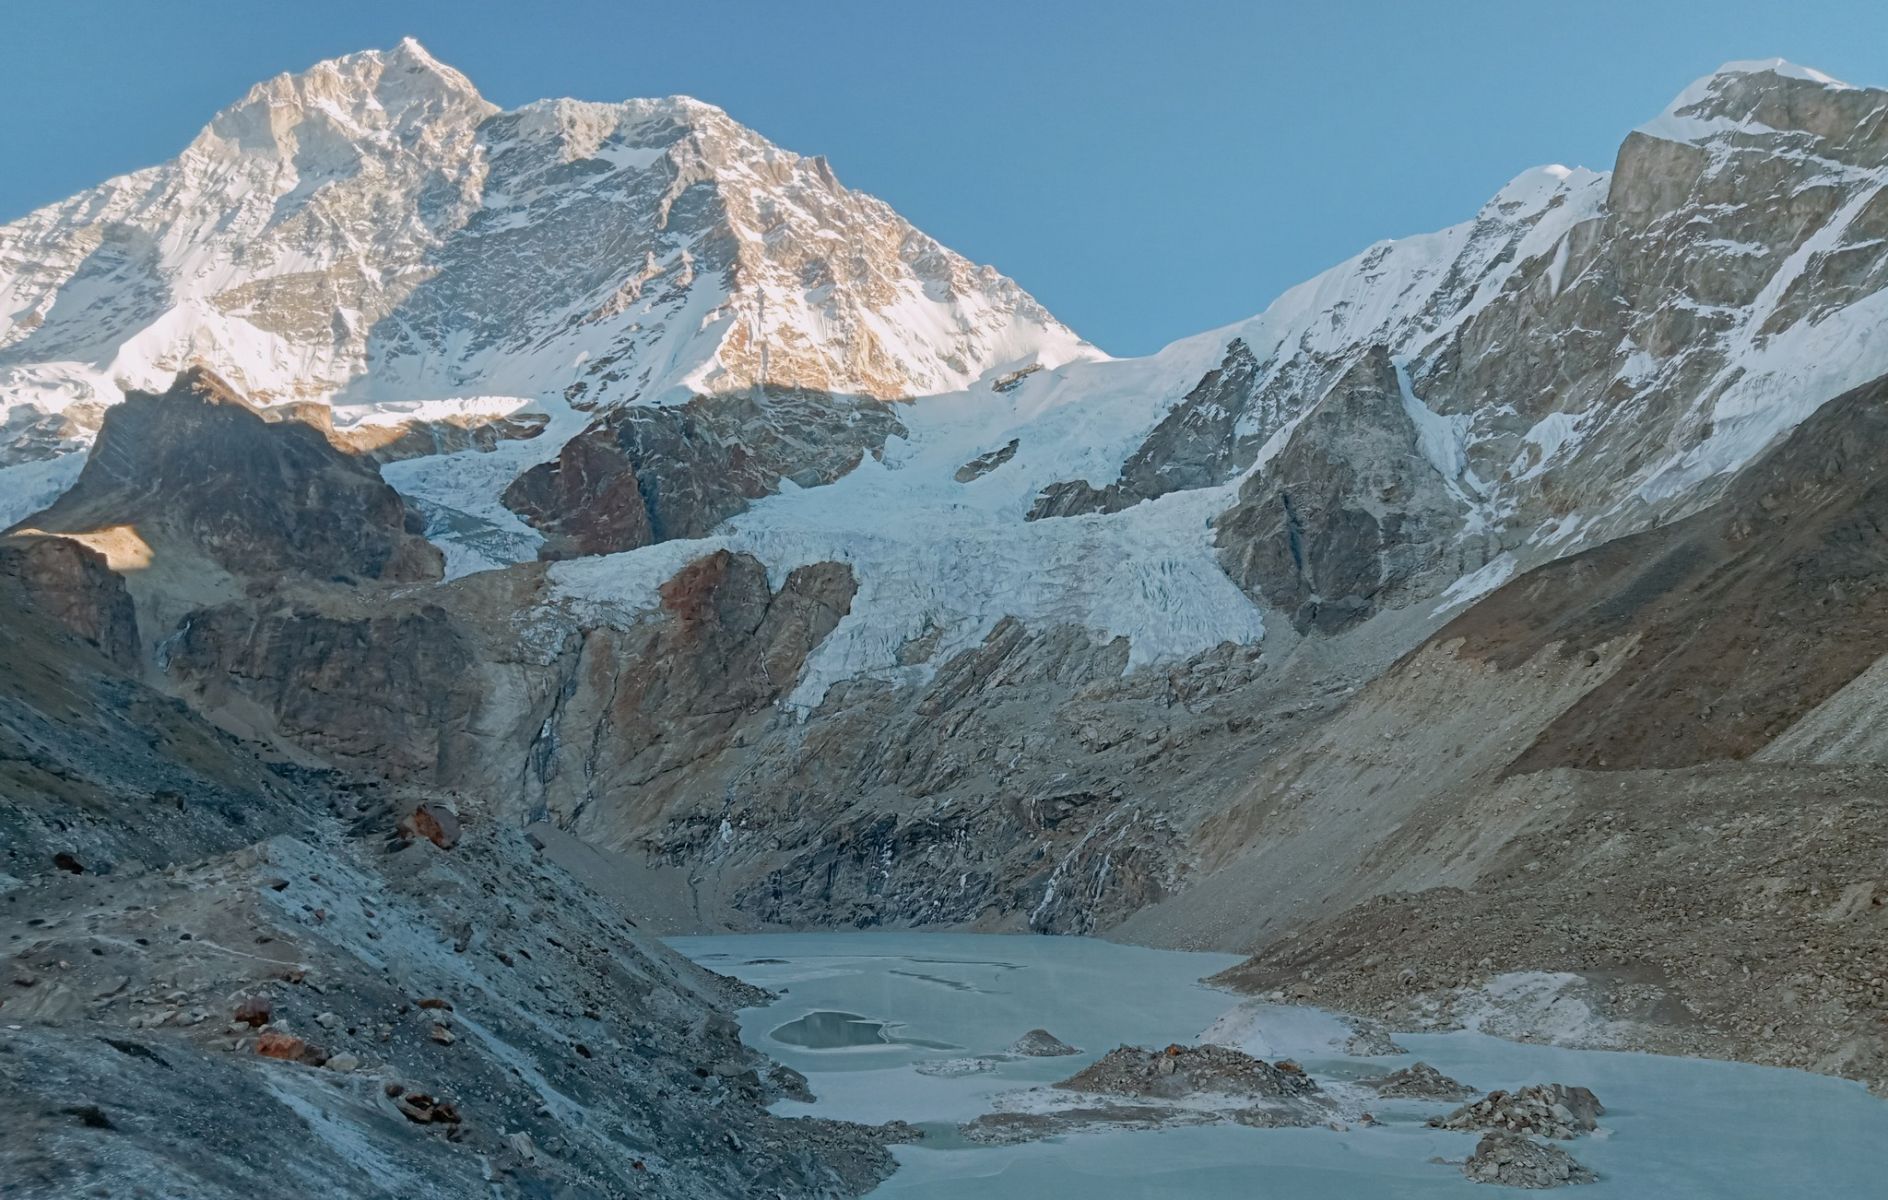 Mt. Makalu above Barun Glacier